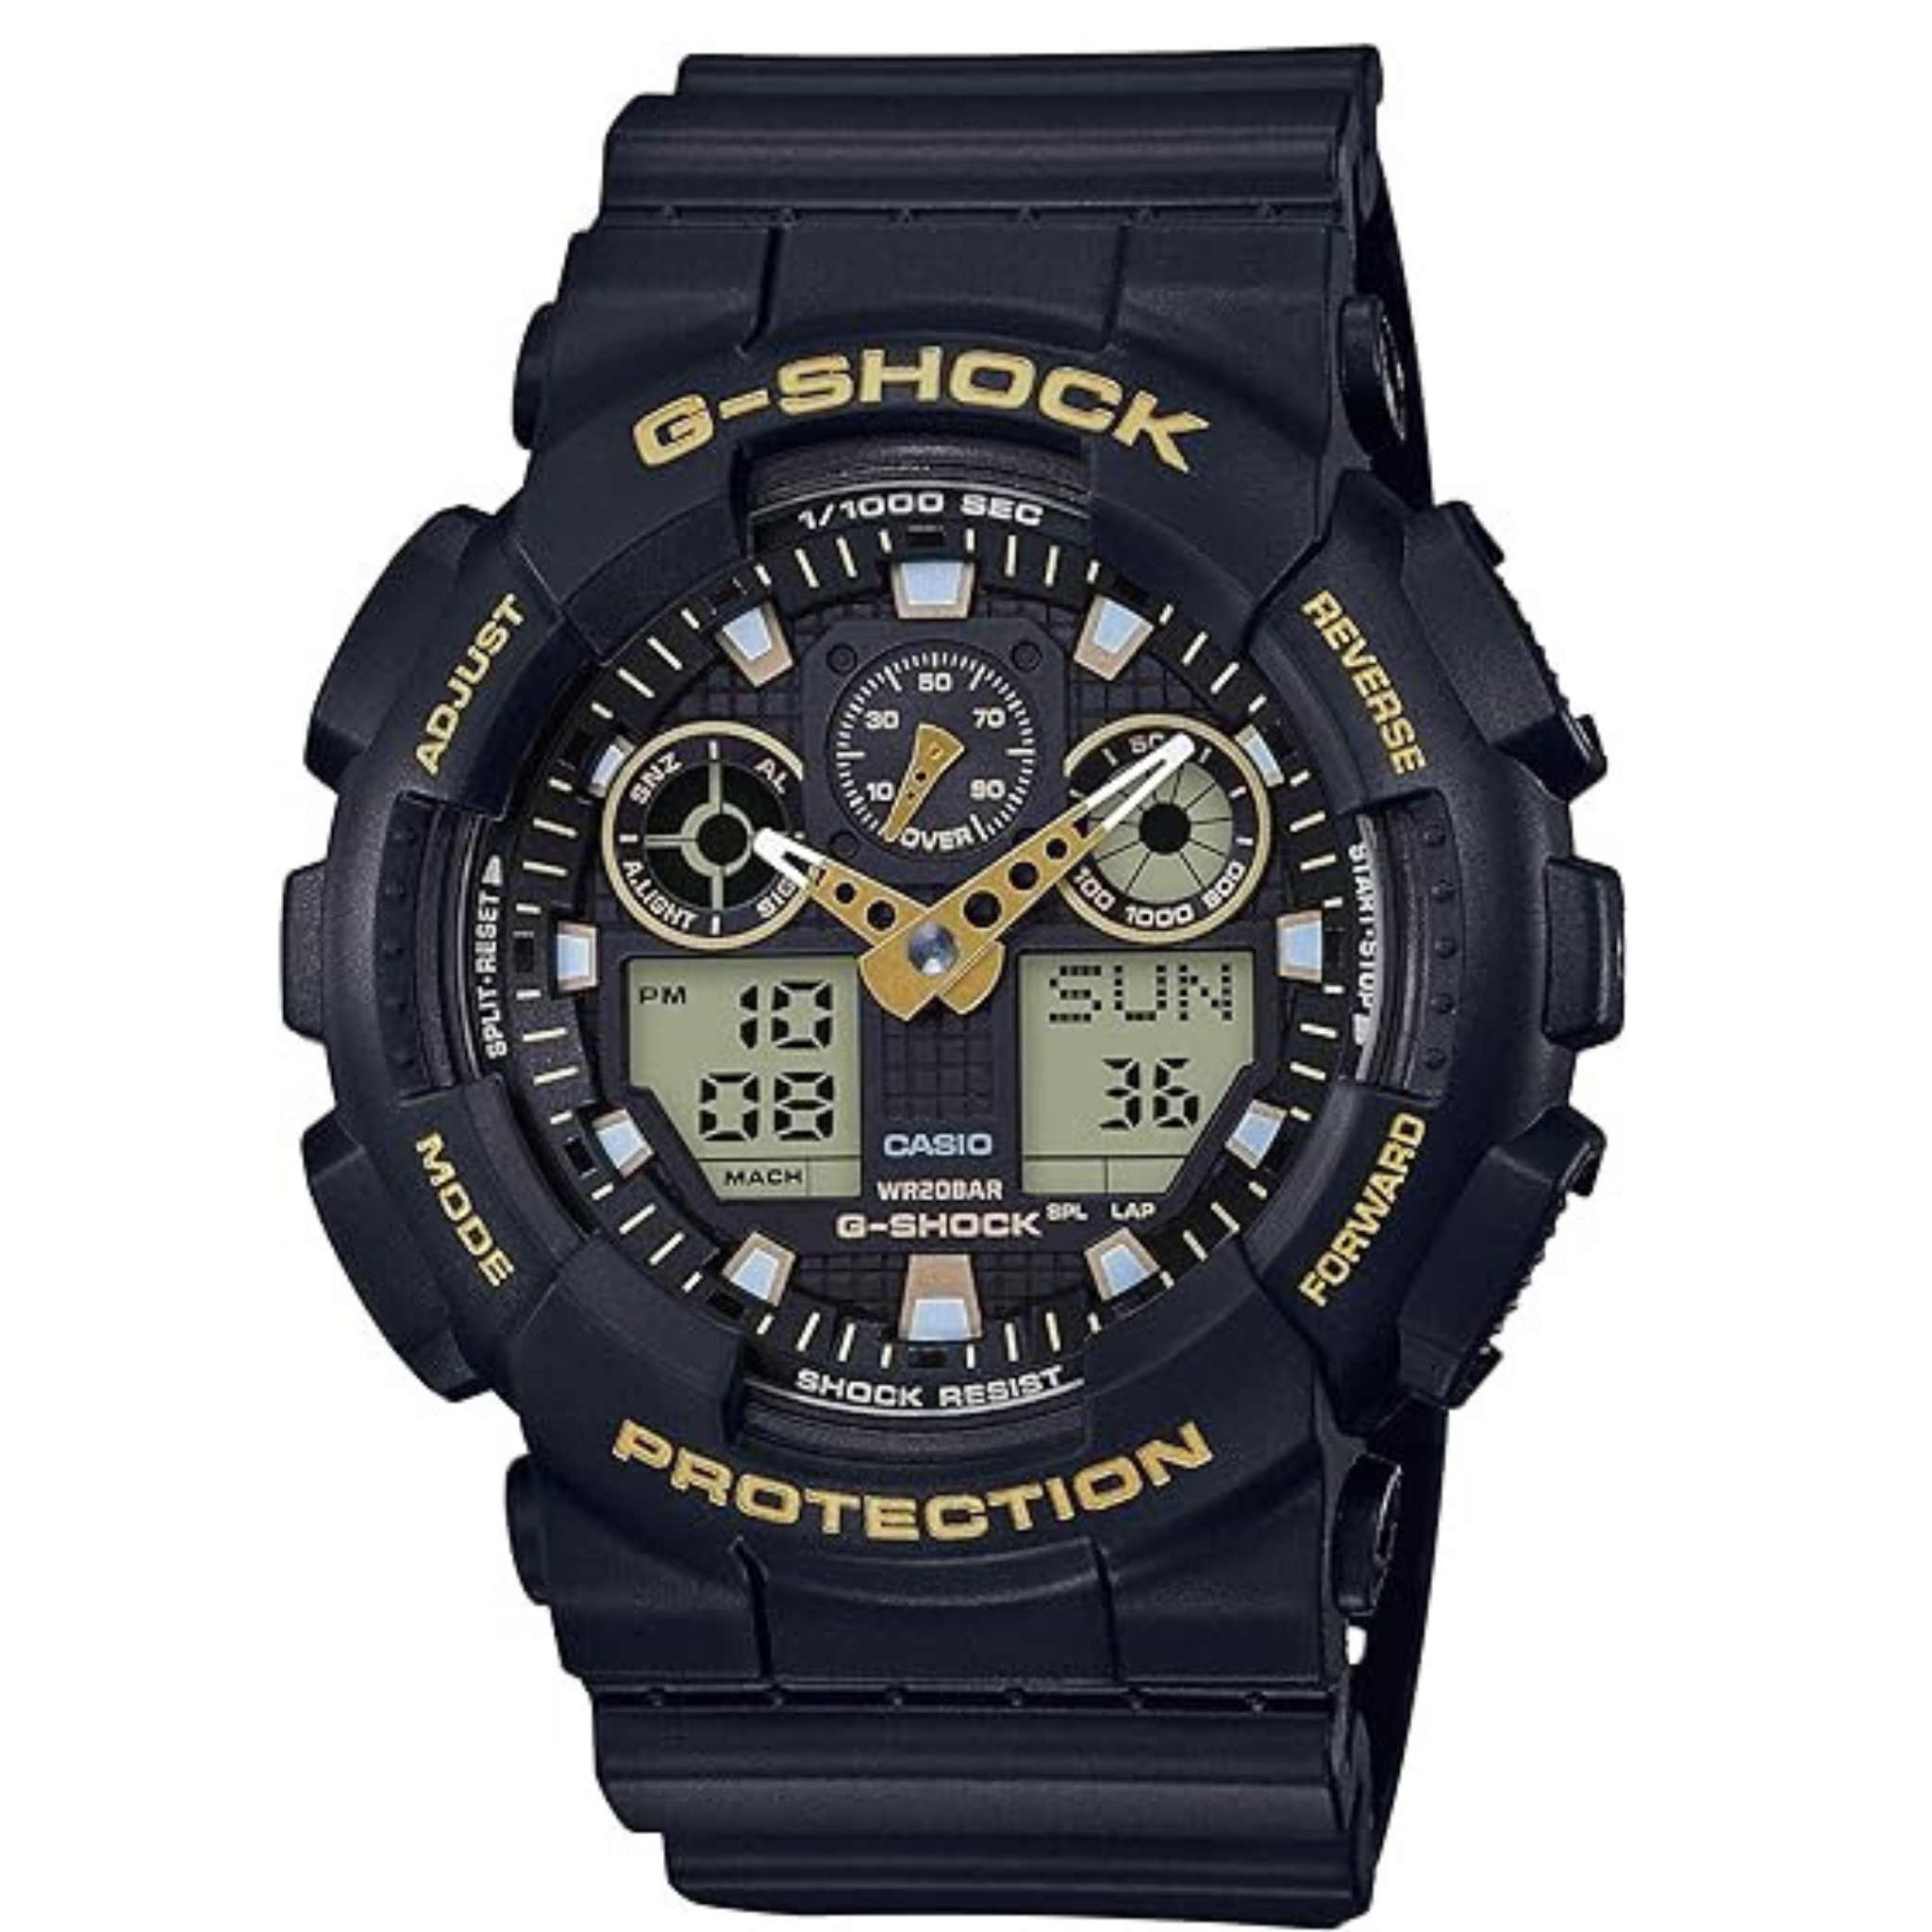 Casio Men's G-Shock XL 200M WR Shock Resistant Resin Watch